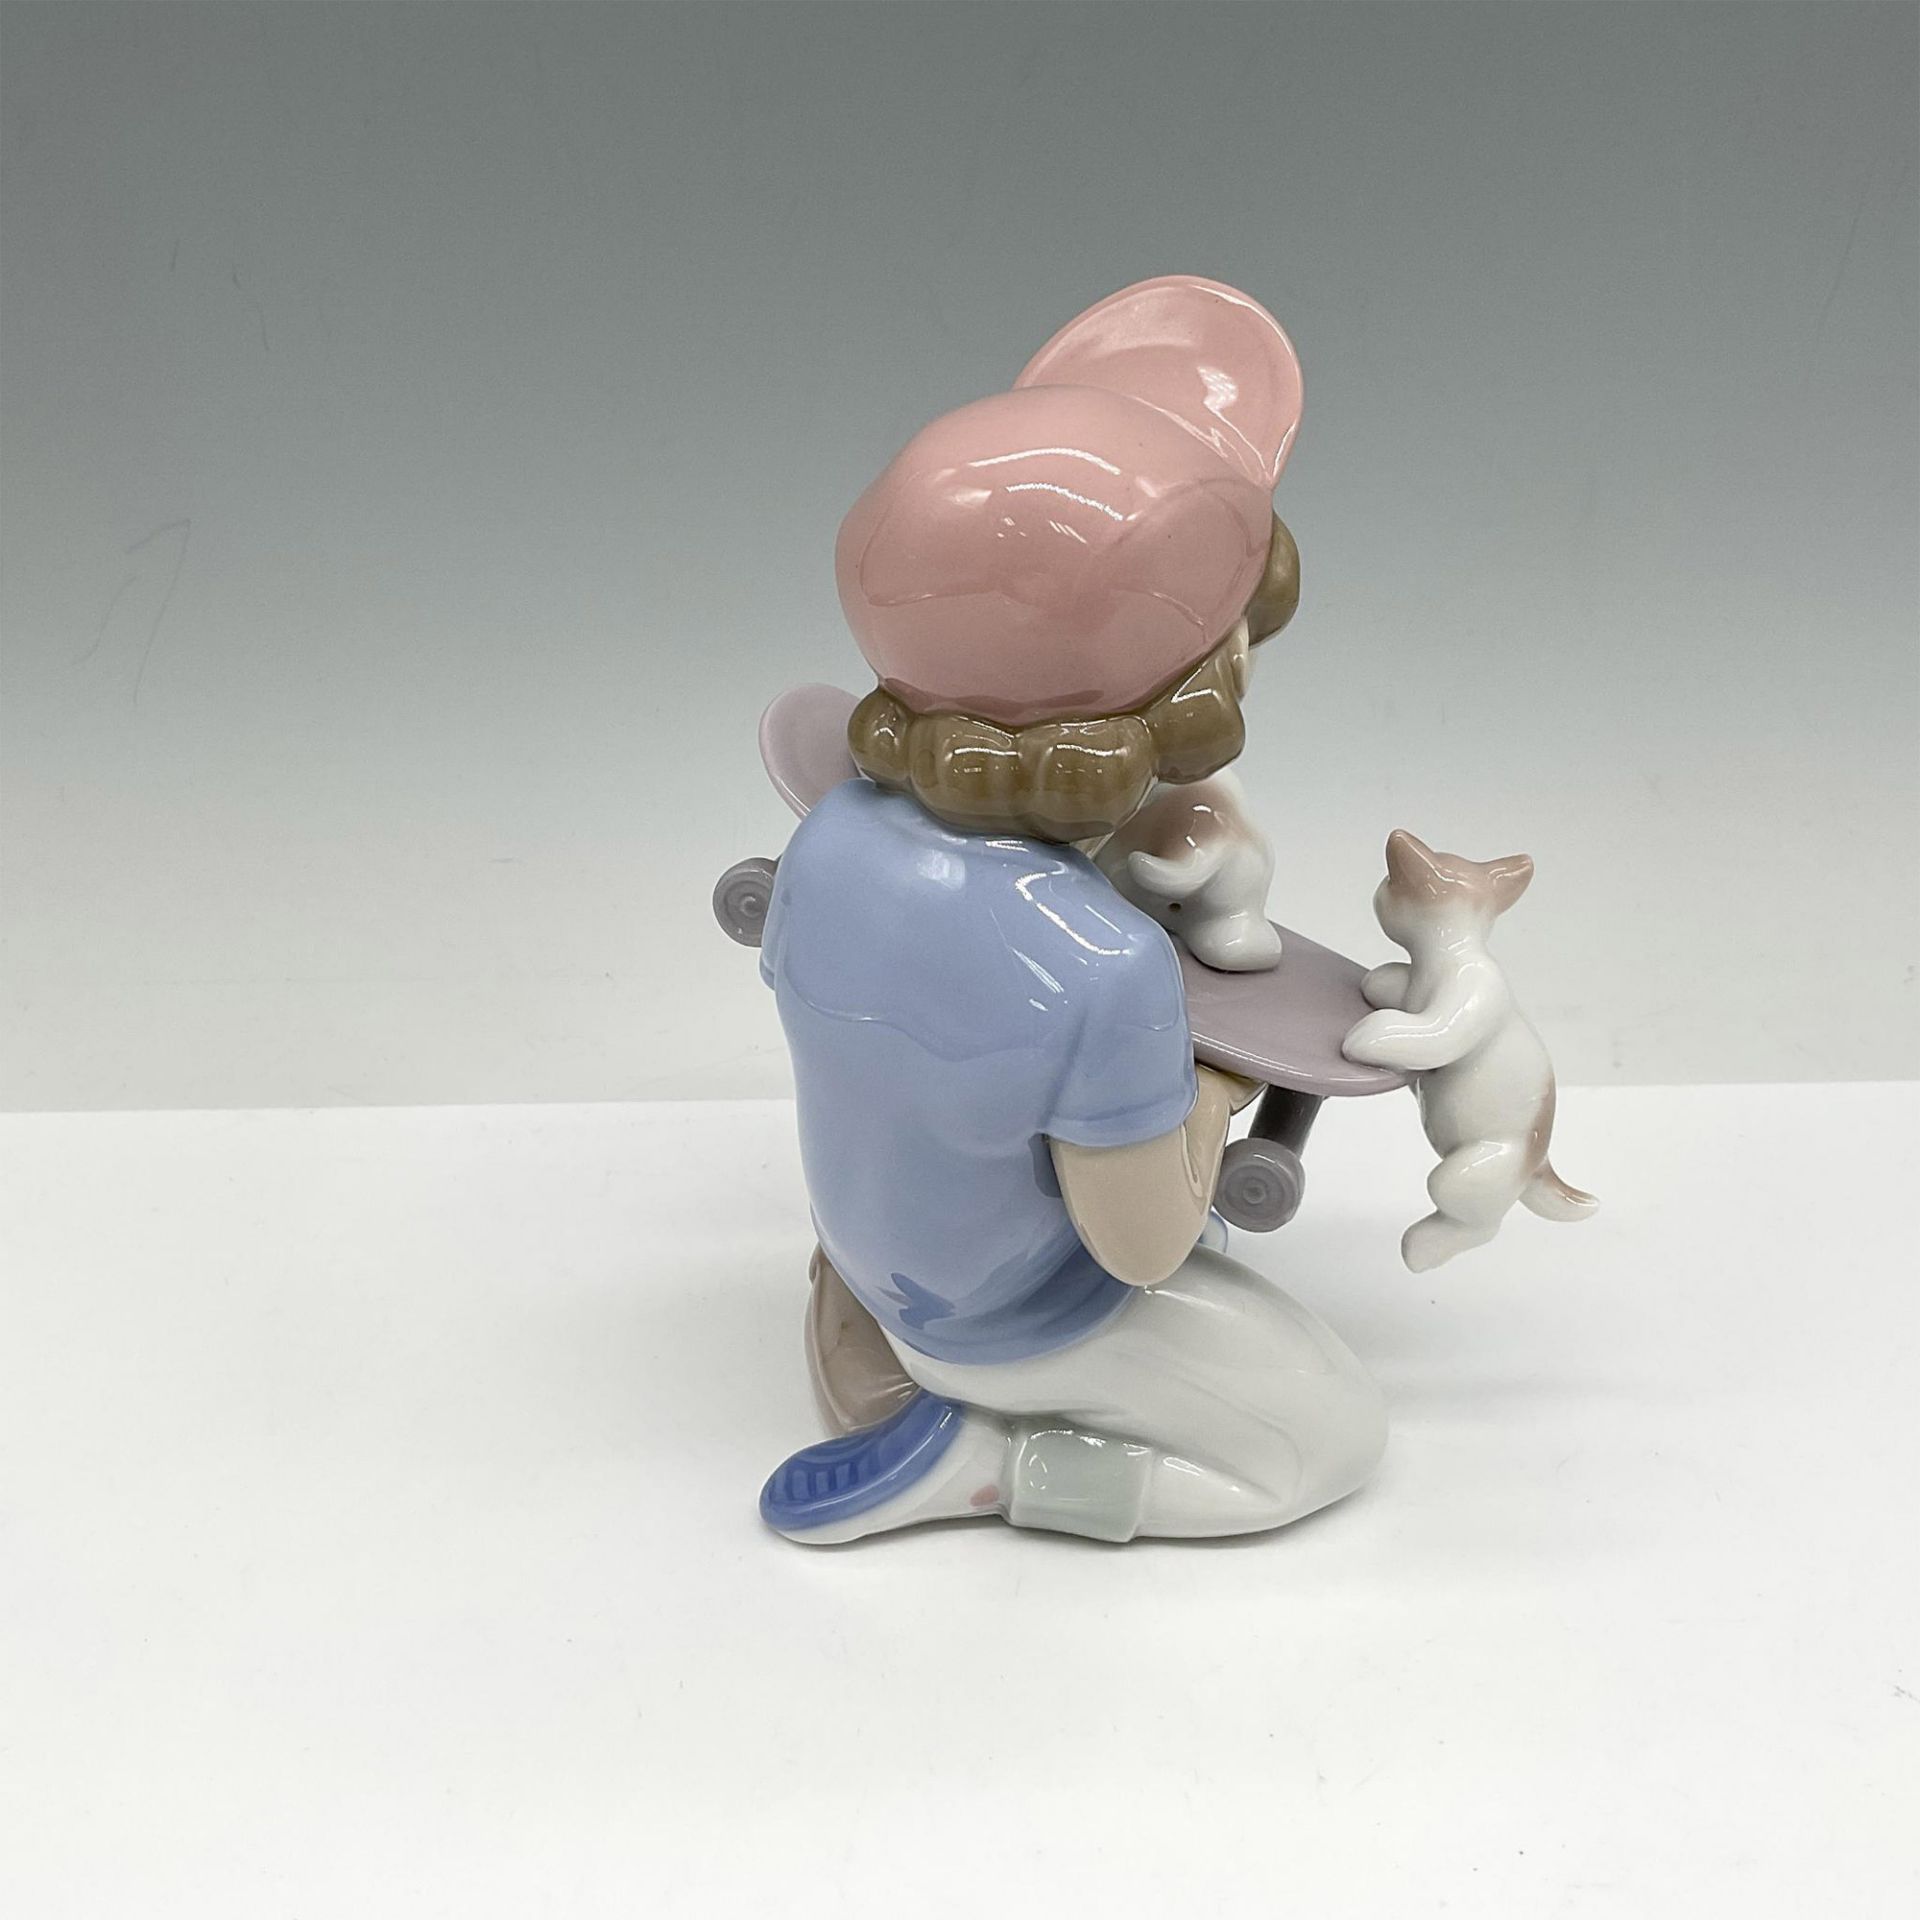 Little Riders 1007623 - Lladro Porcelain Figurine - Image 2 of 4